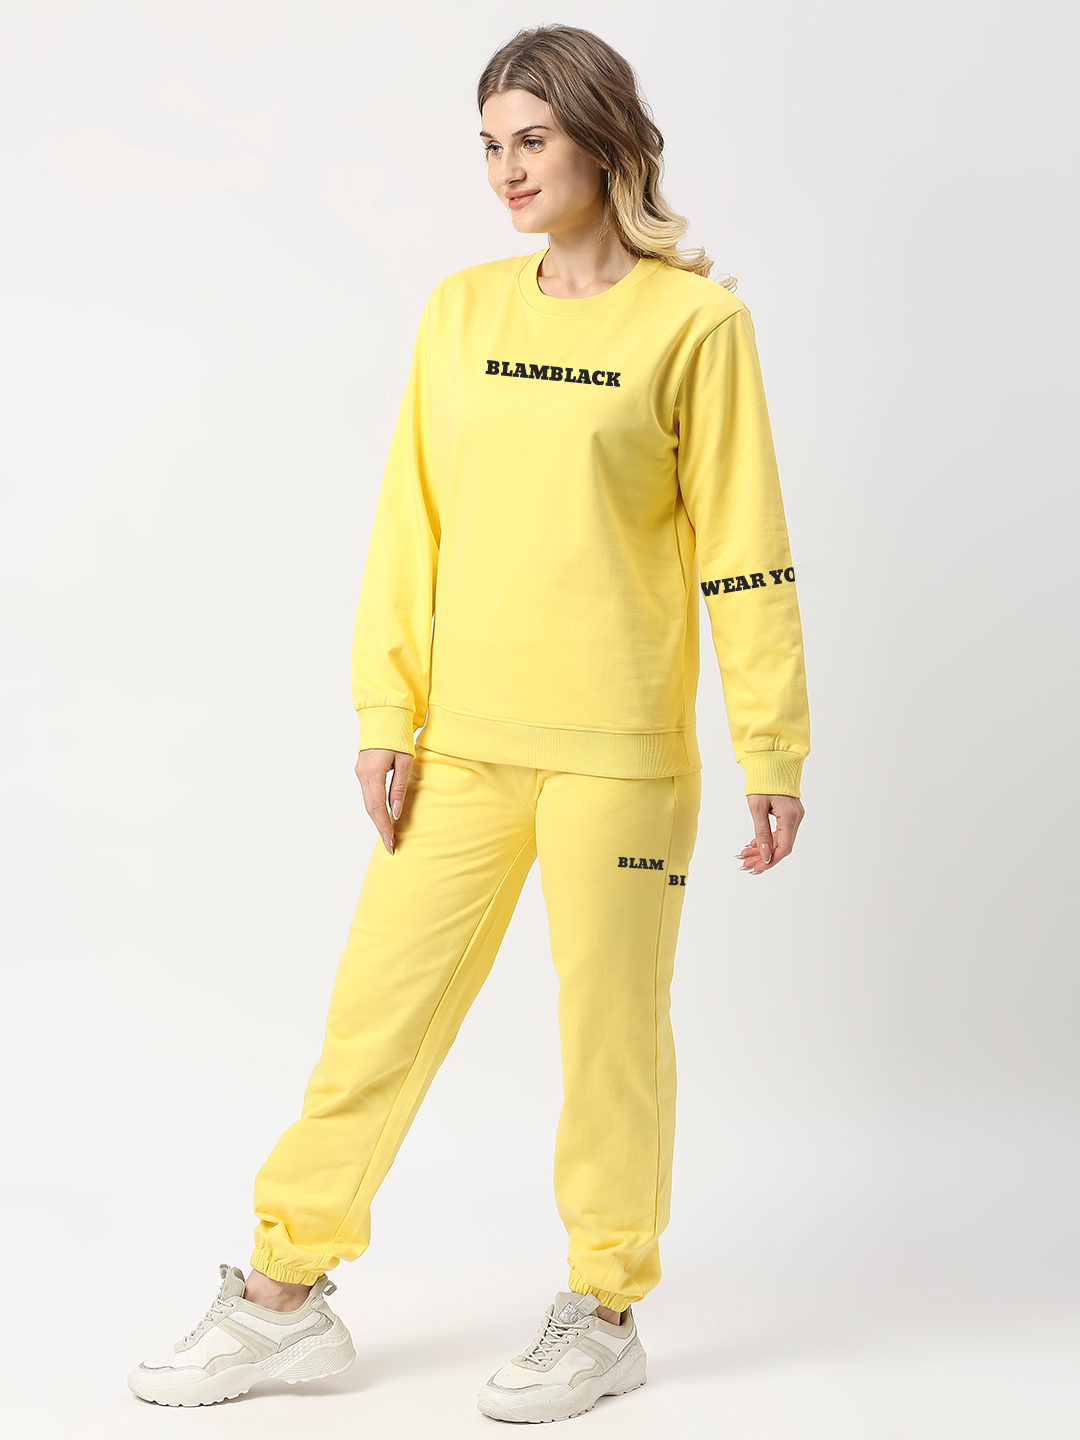 Buy Blamblack Lemon Yellow Sweatshirt and Joggers Co-ord Set